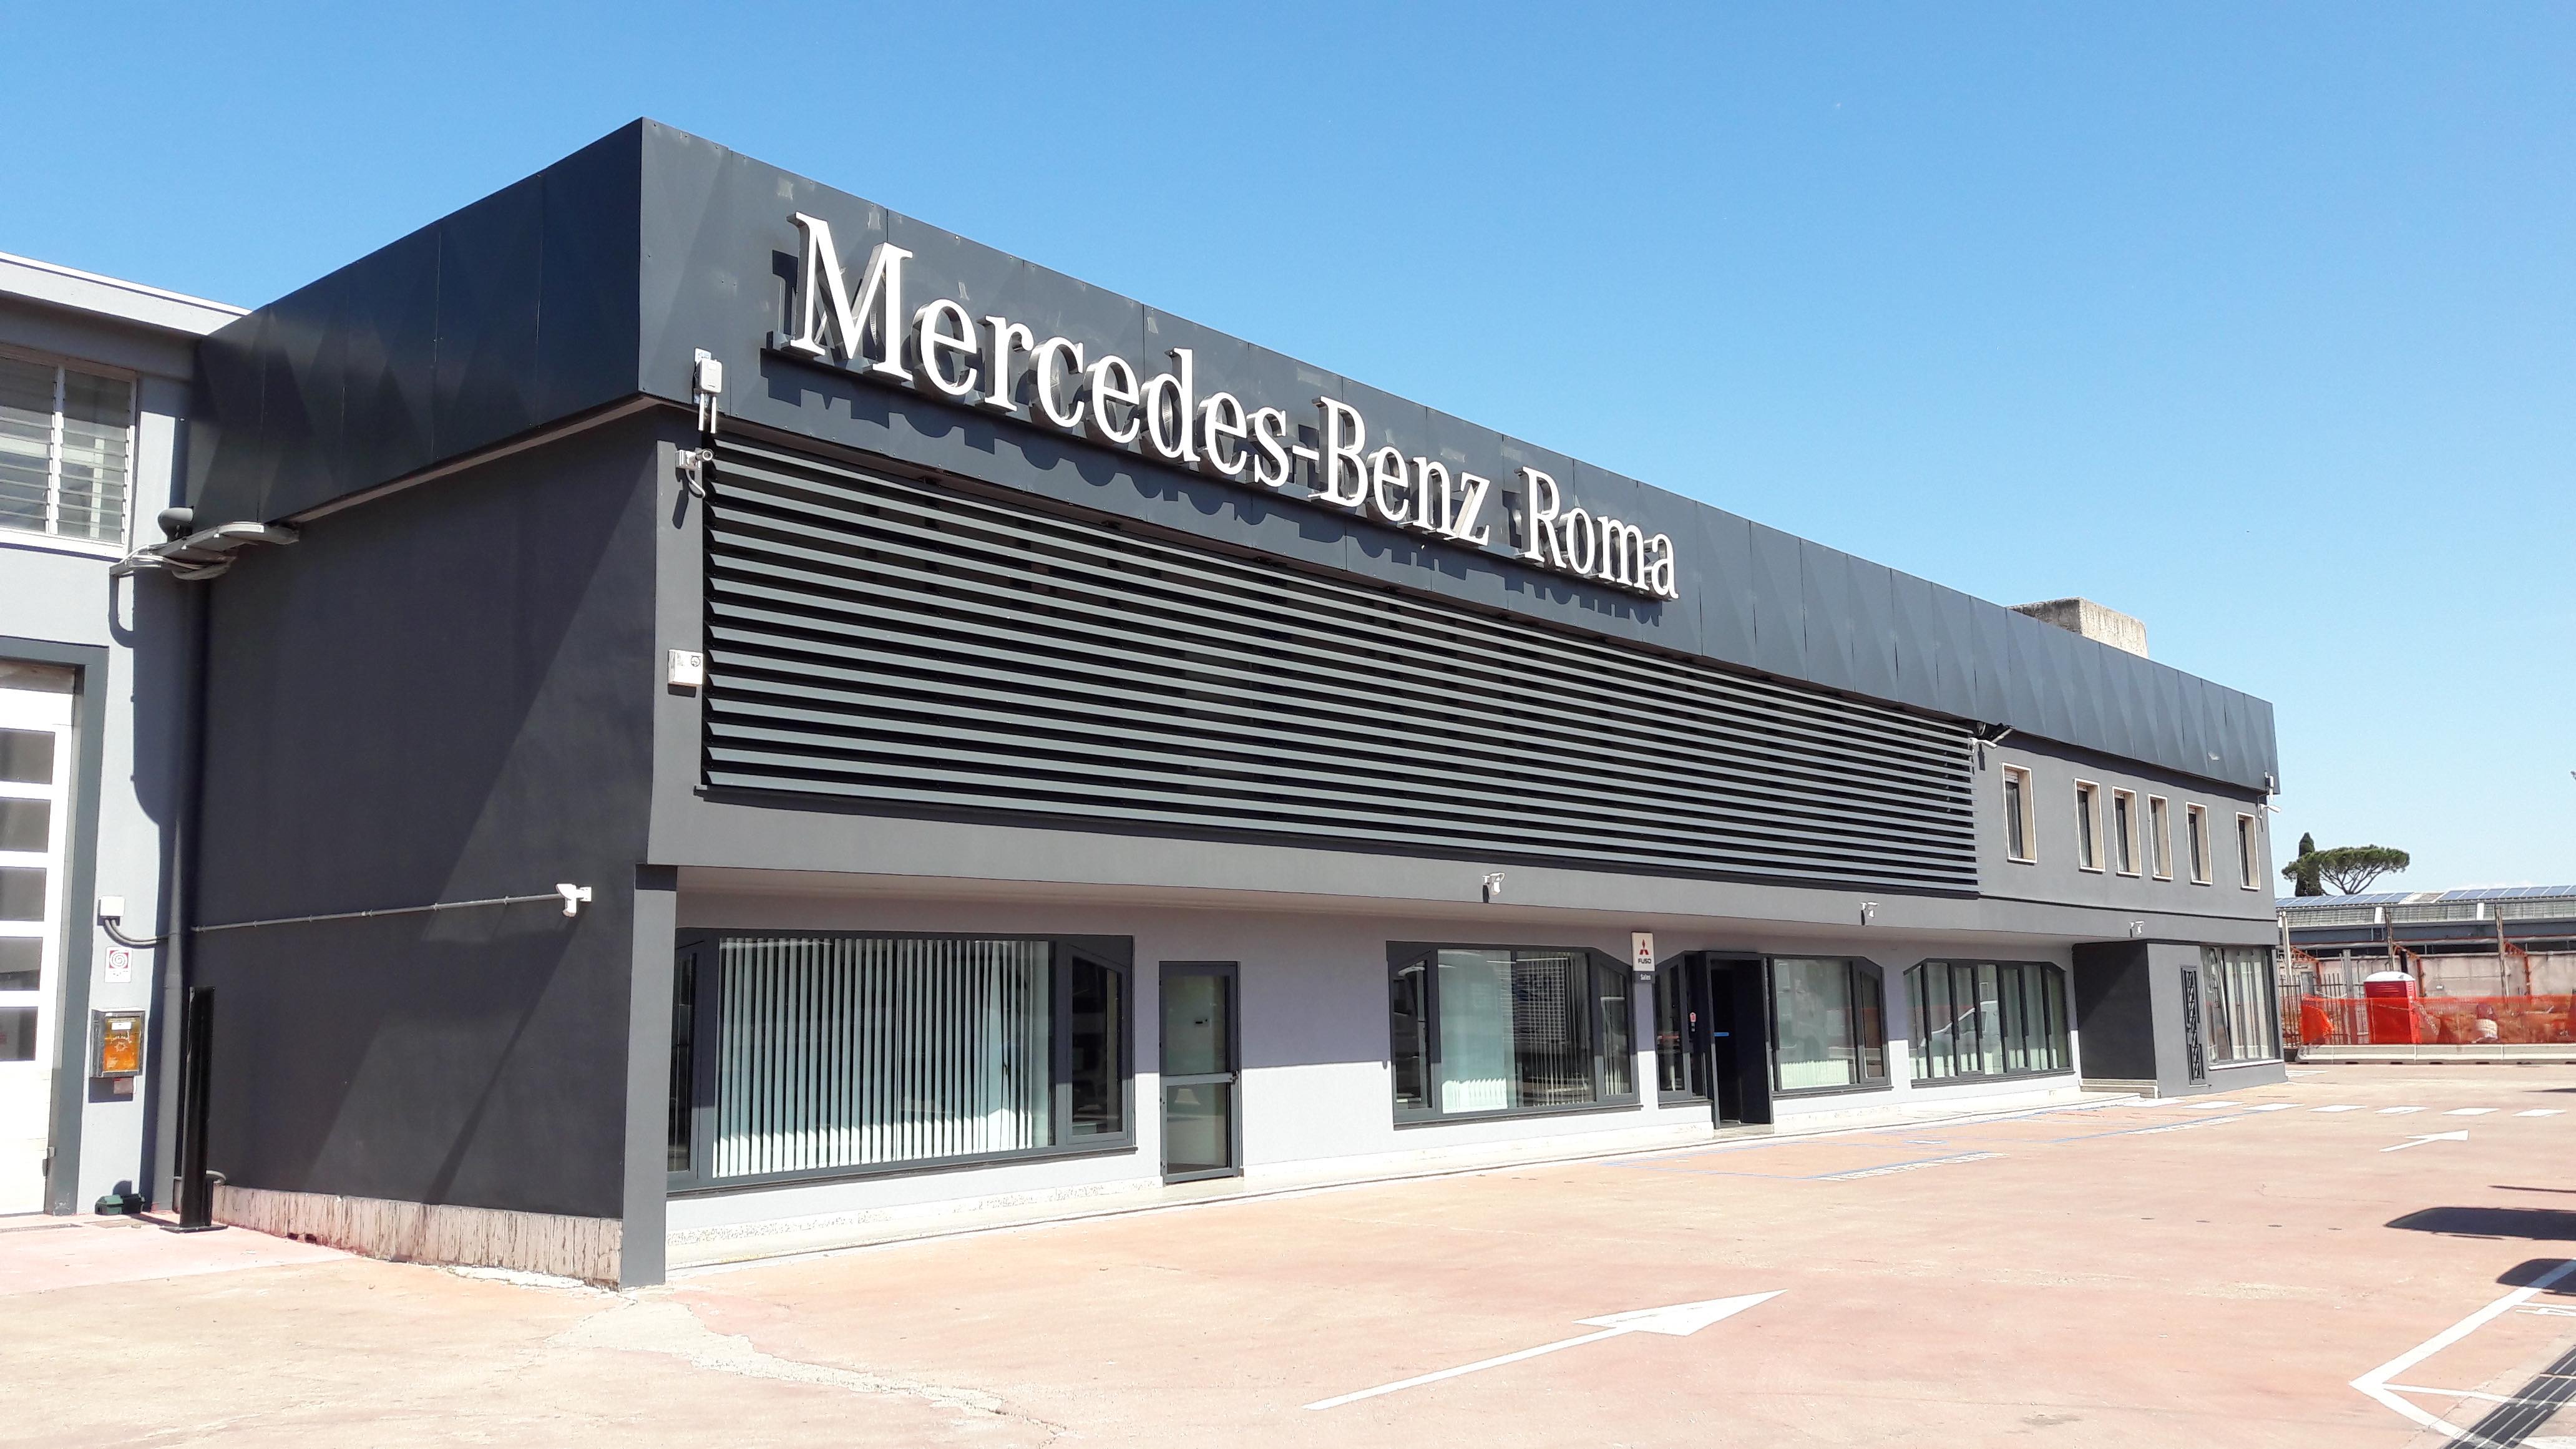 Mercedes-Benz Roma, inaugurata la nuova sede Vans e Trucks